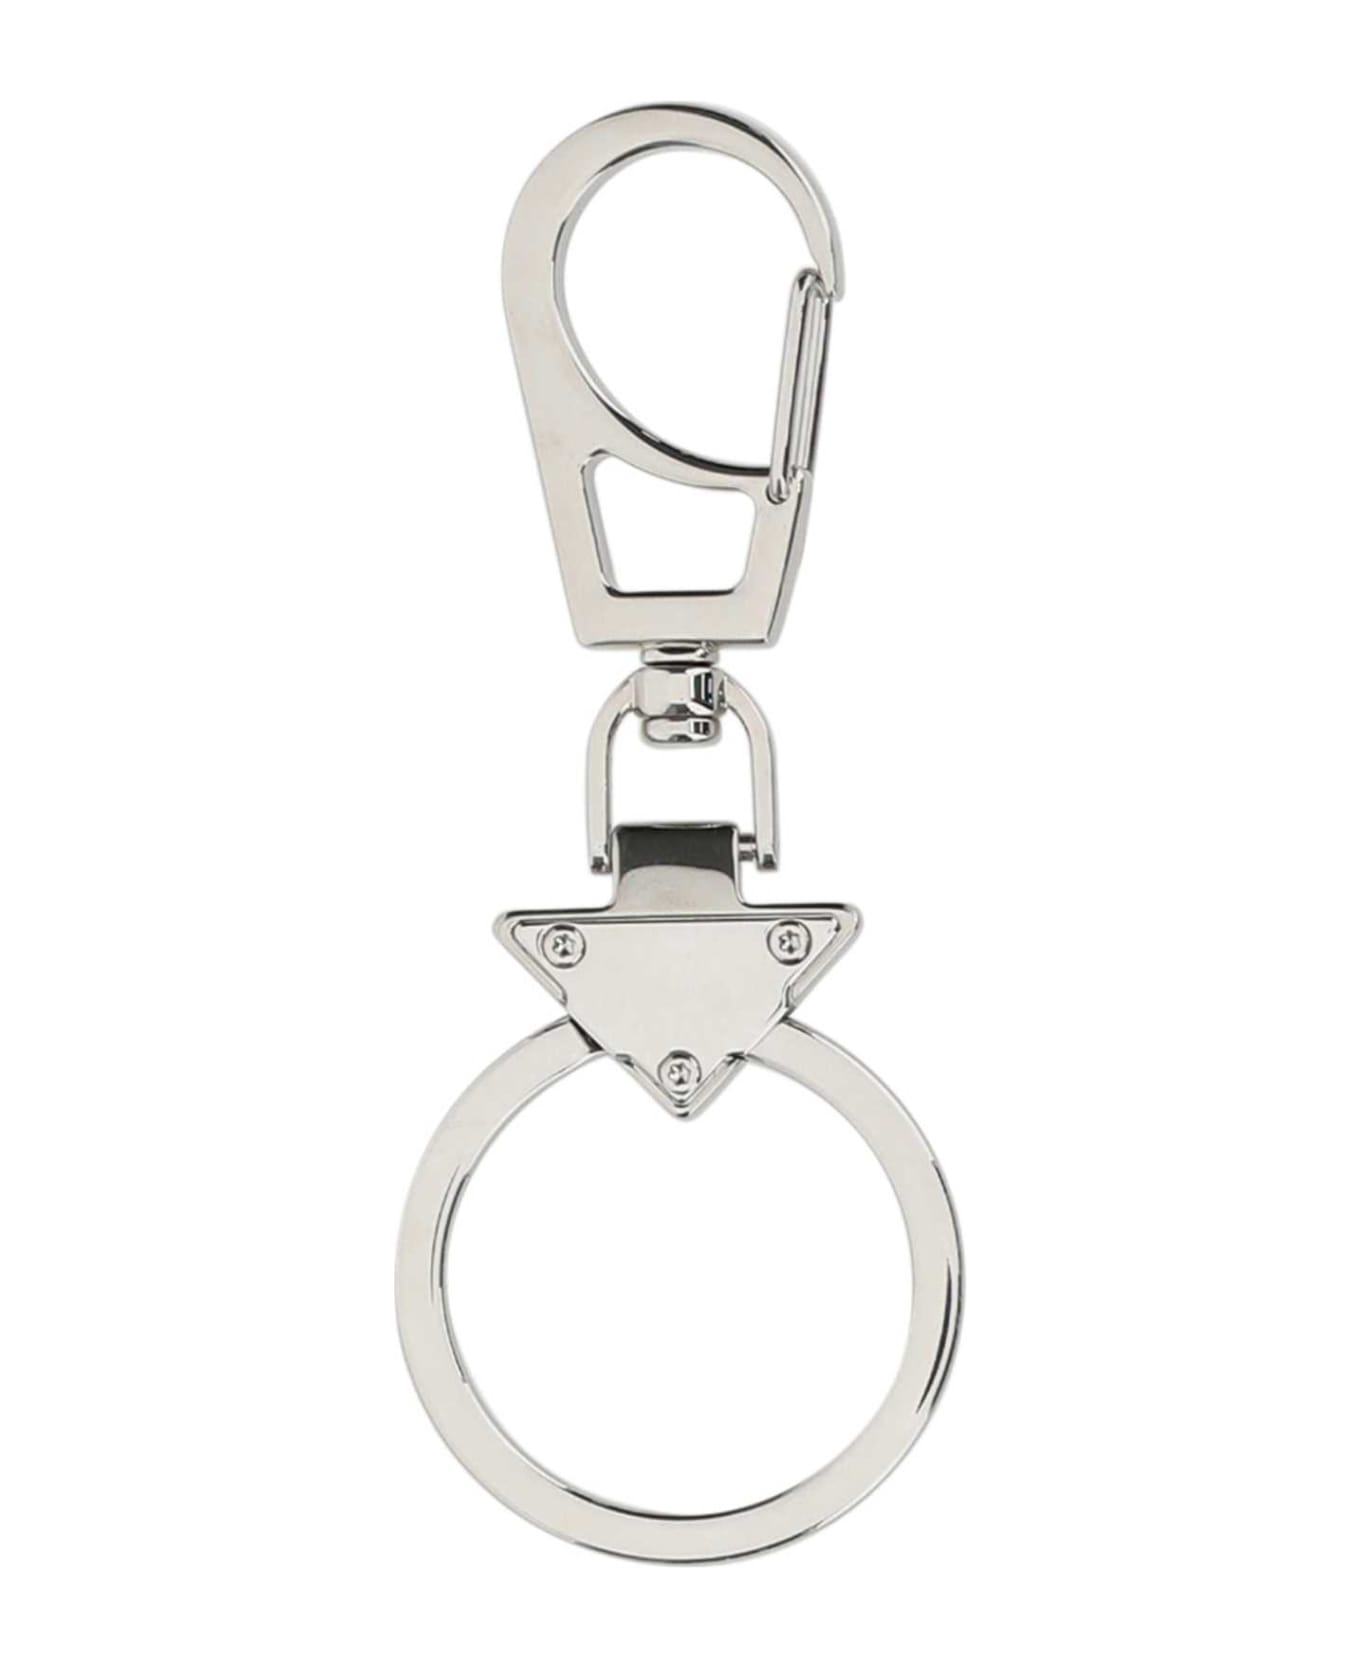 Prada Silver Metal Key Ring - F0002